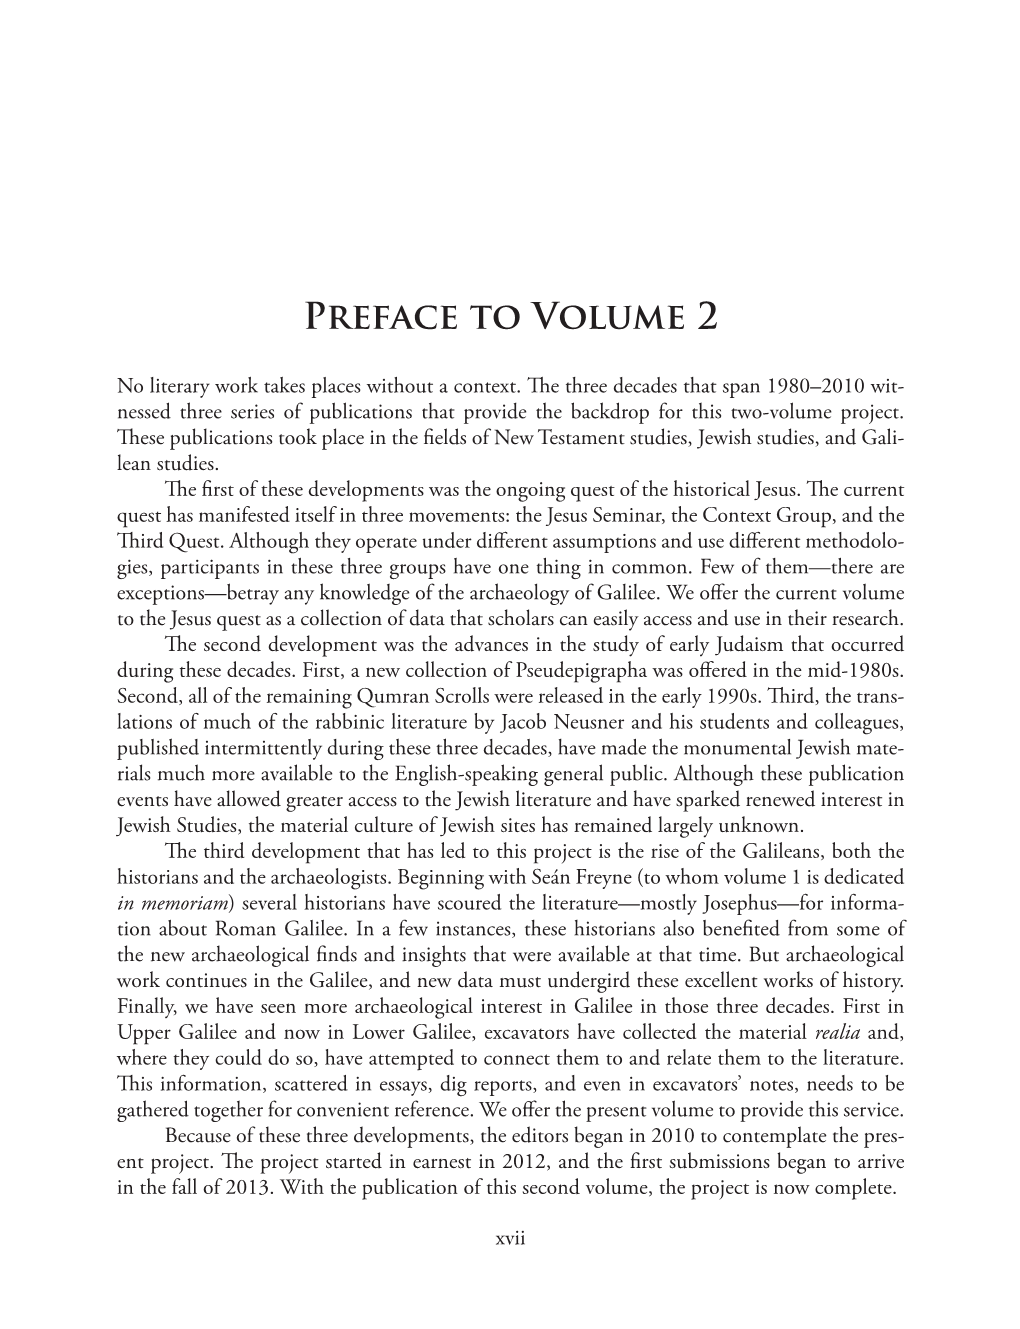 Preface to Volume 2